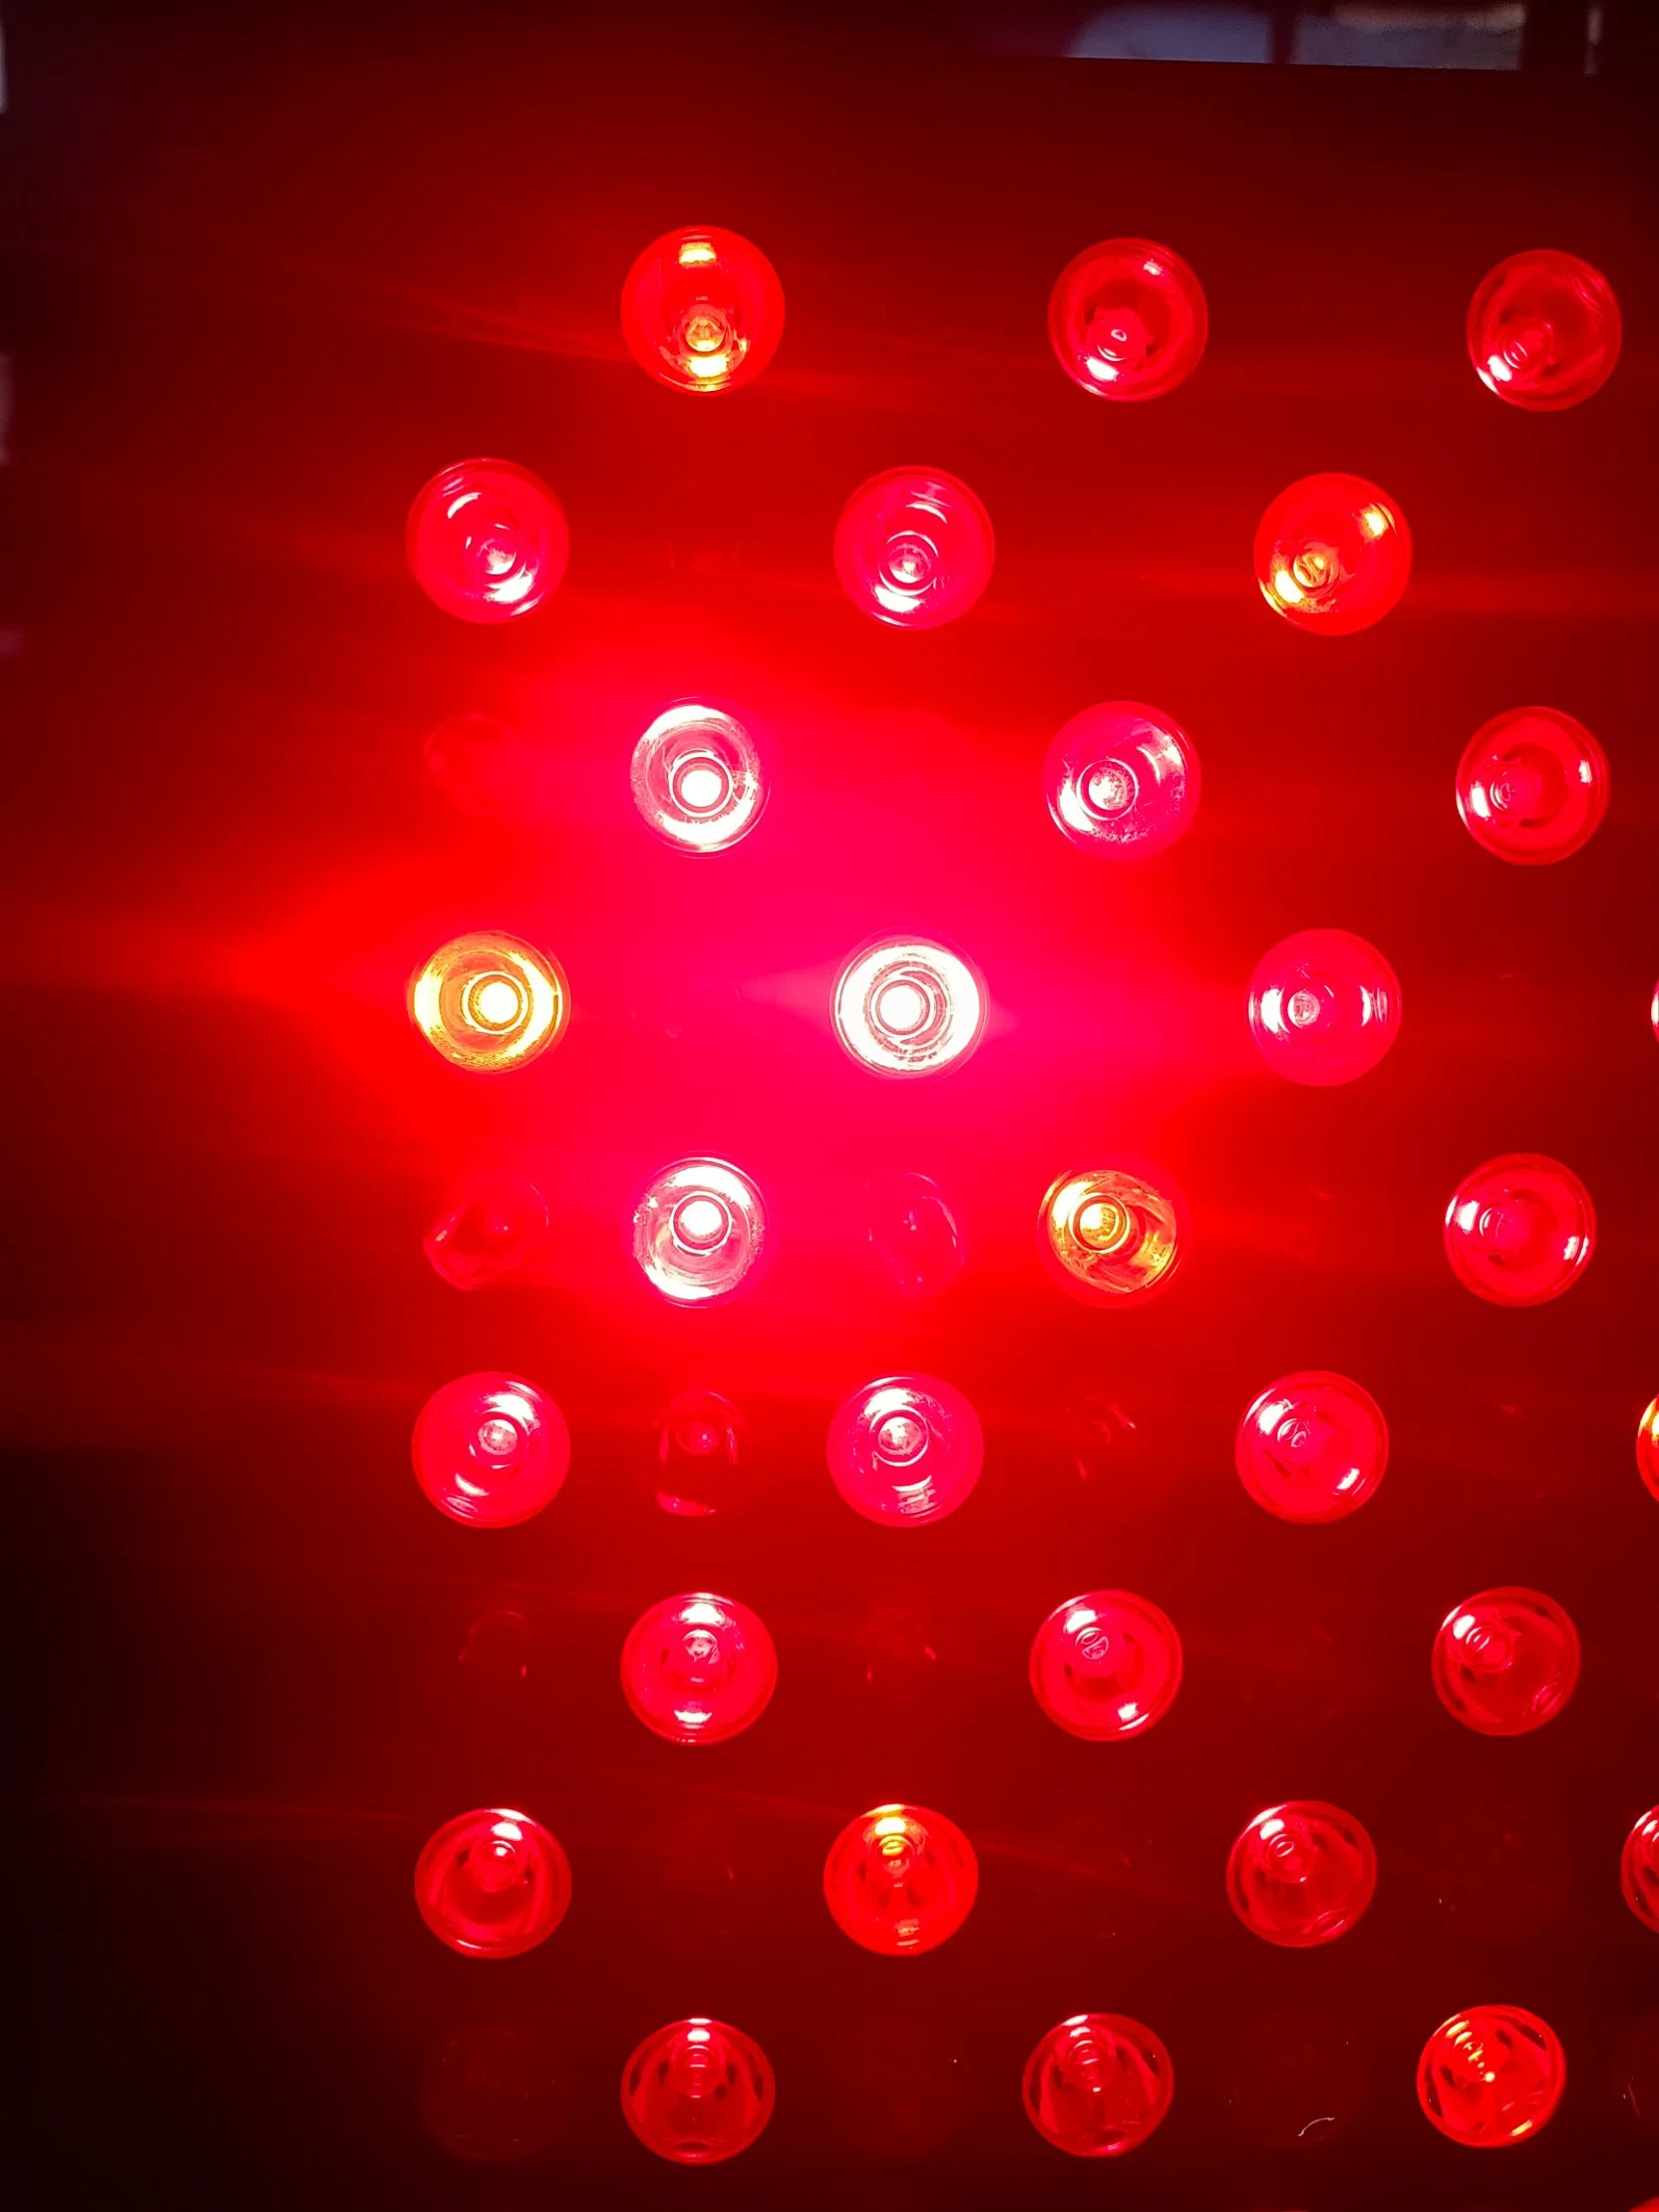 Home Exercise Assist Blanco Al1500A 300PCS LED Full Body Infrared Lámpara Panel dispositivo Luz roja Terapia Luz Regalos de año Nuevo